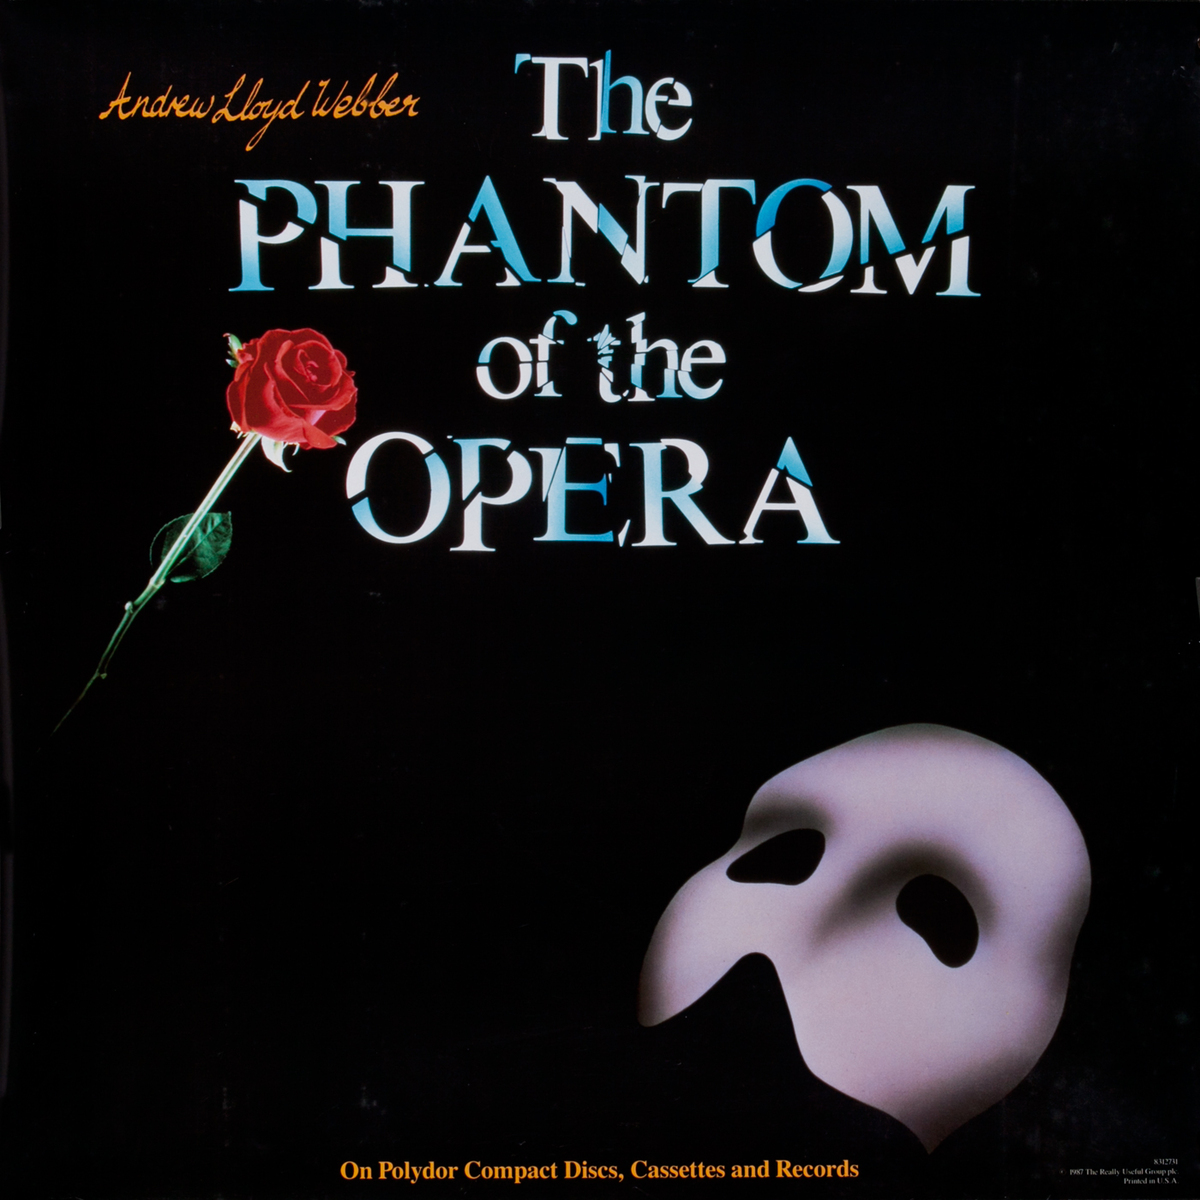 Phantom of the Opera (cd/records) Original Vintage Music Poster